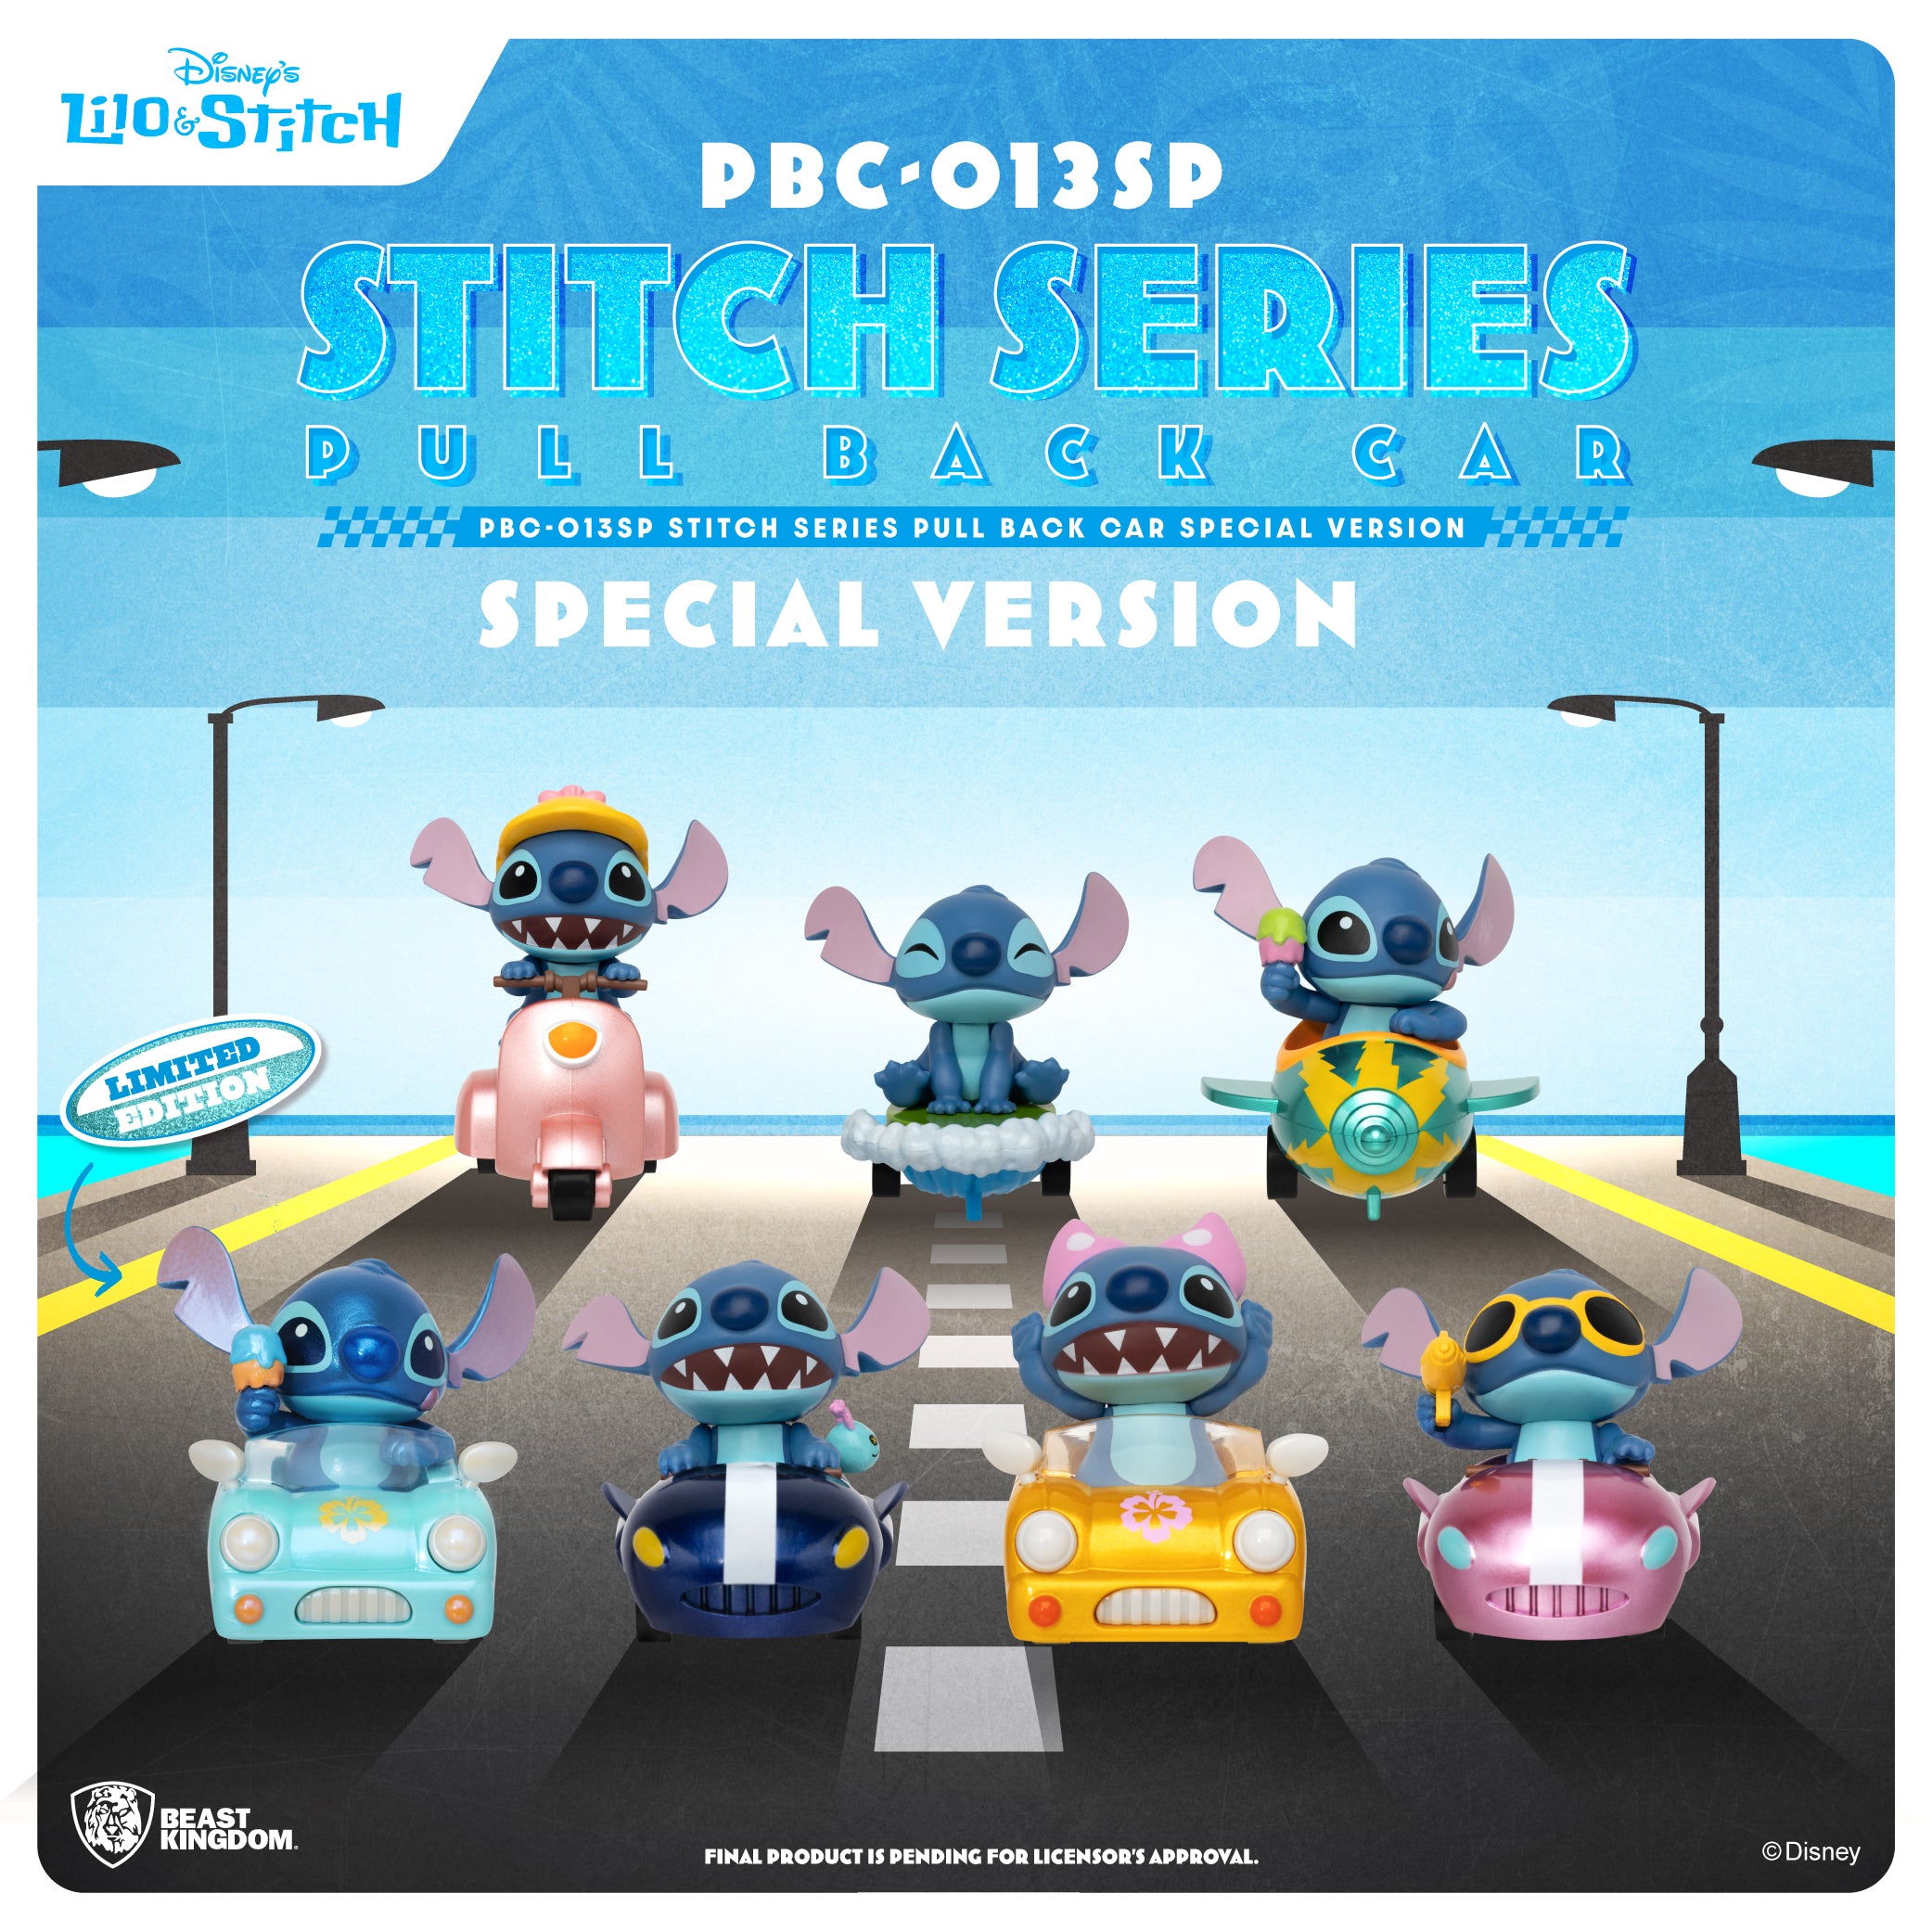 DISNEY Stitch Series Pull Back Car set (Pull Back Car)